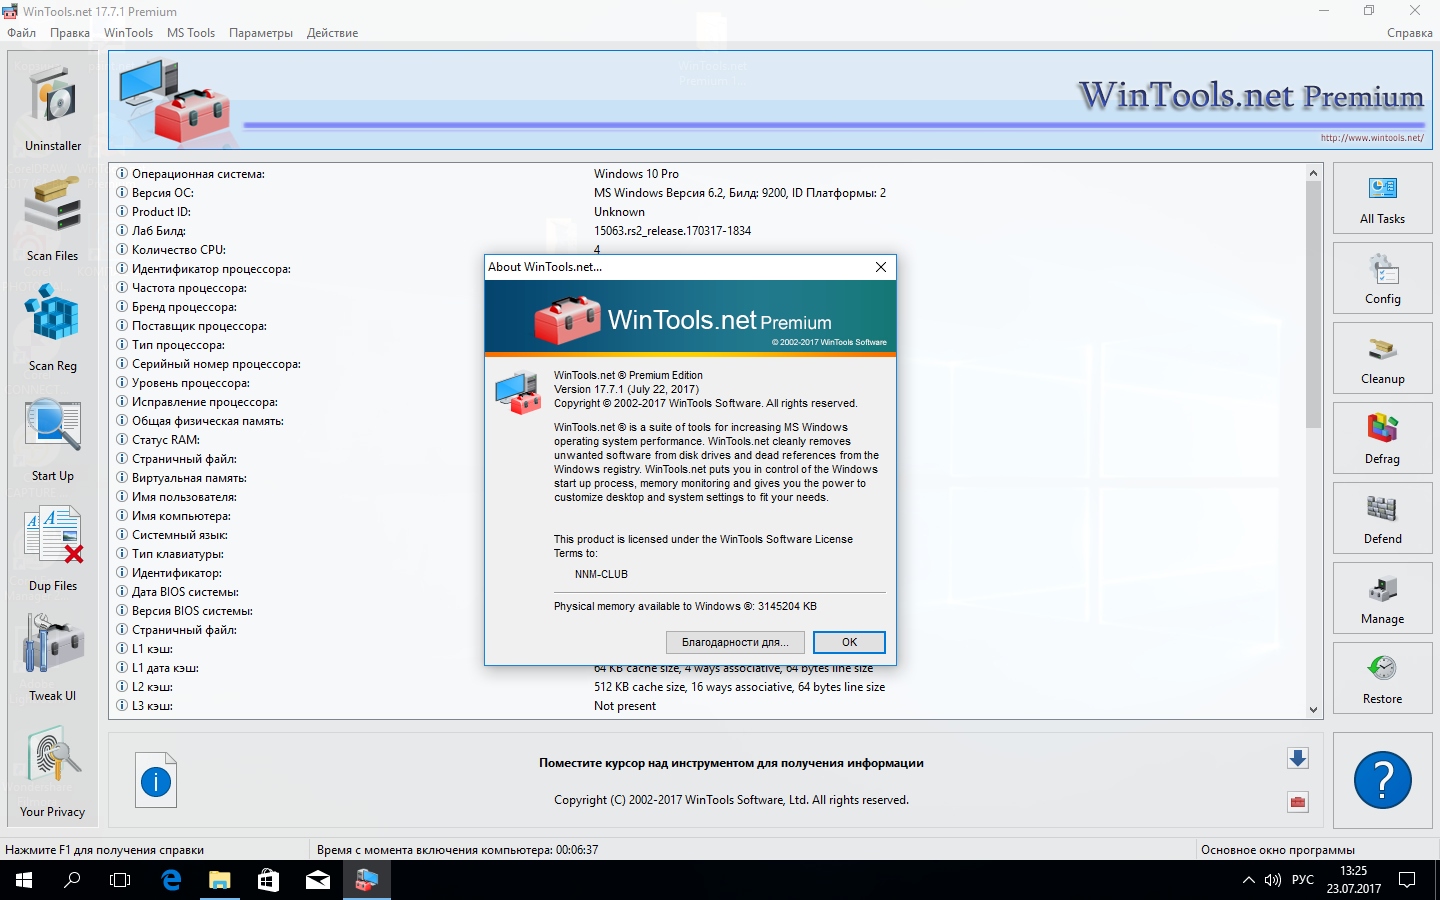 WinTools net Premium 23.7.1 free downloads